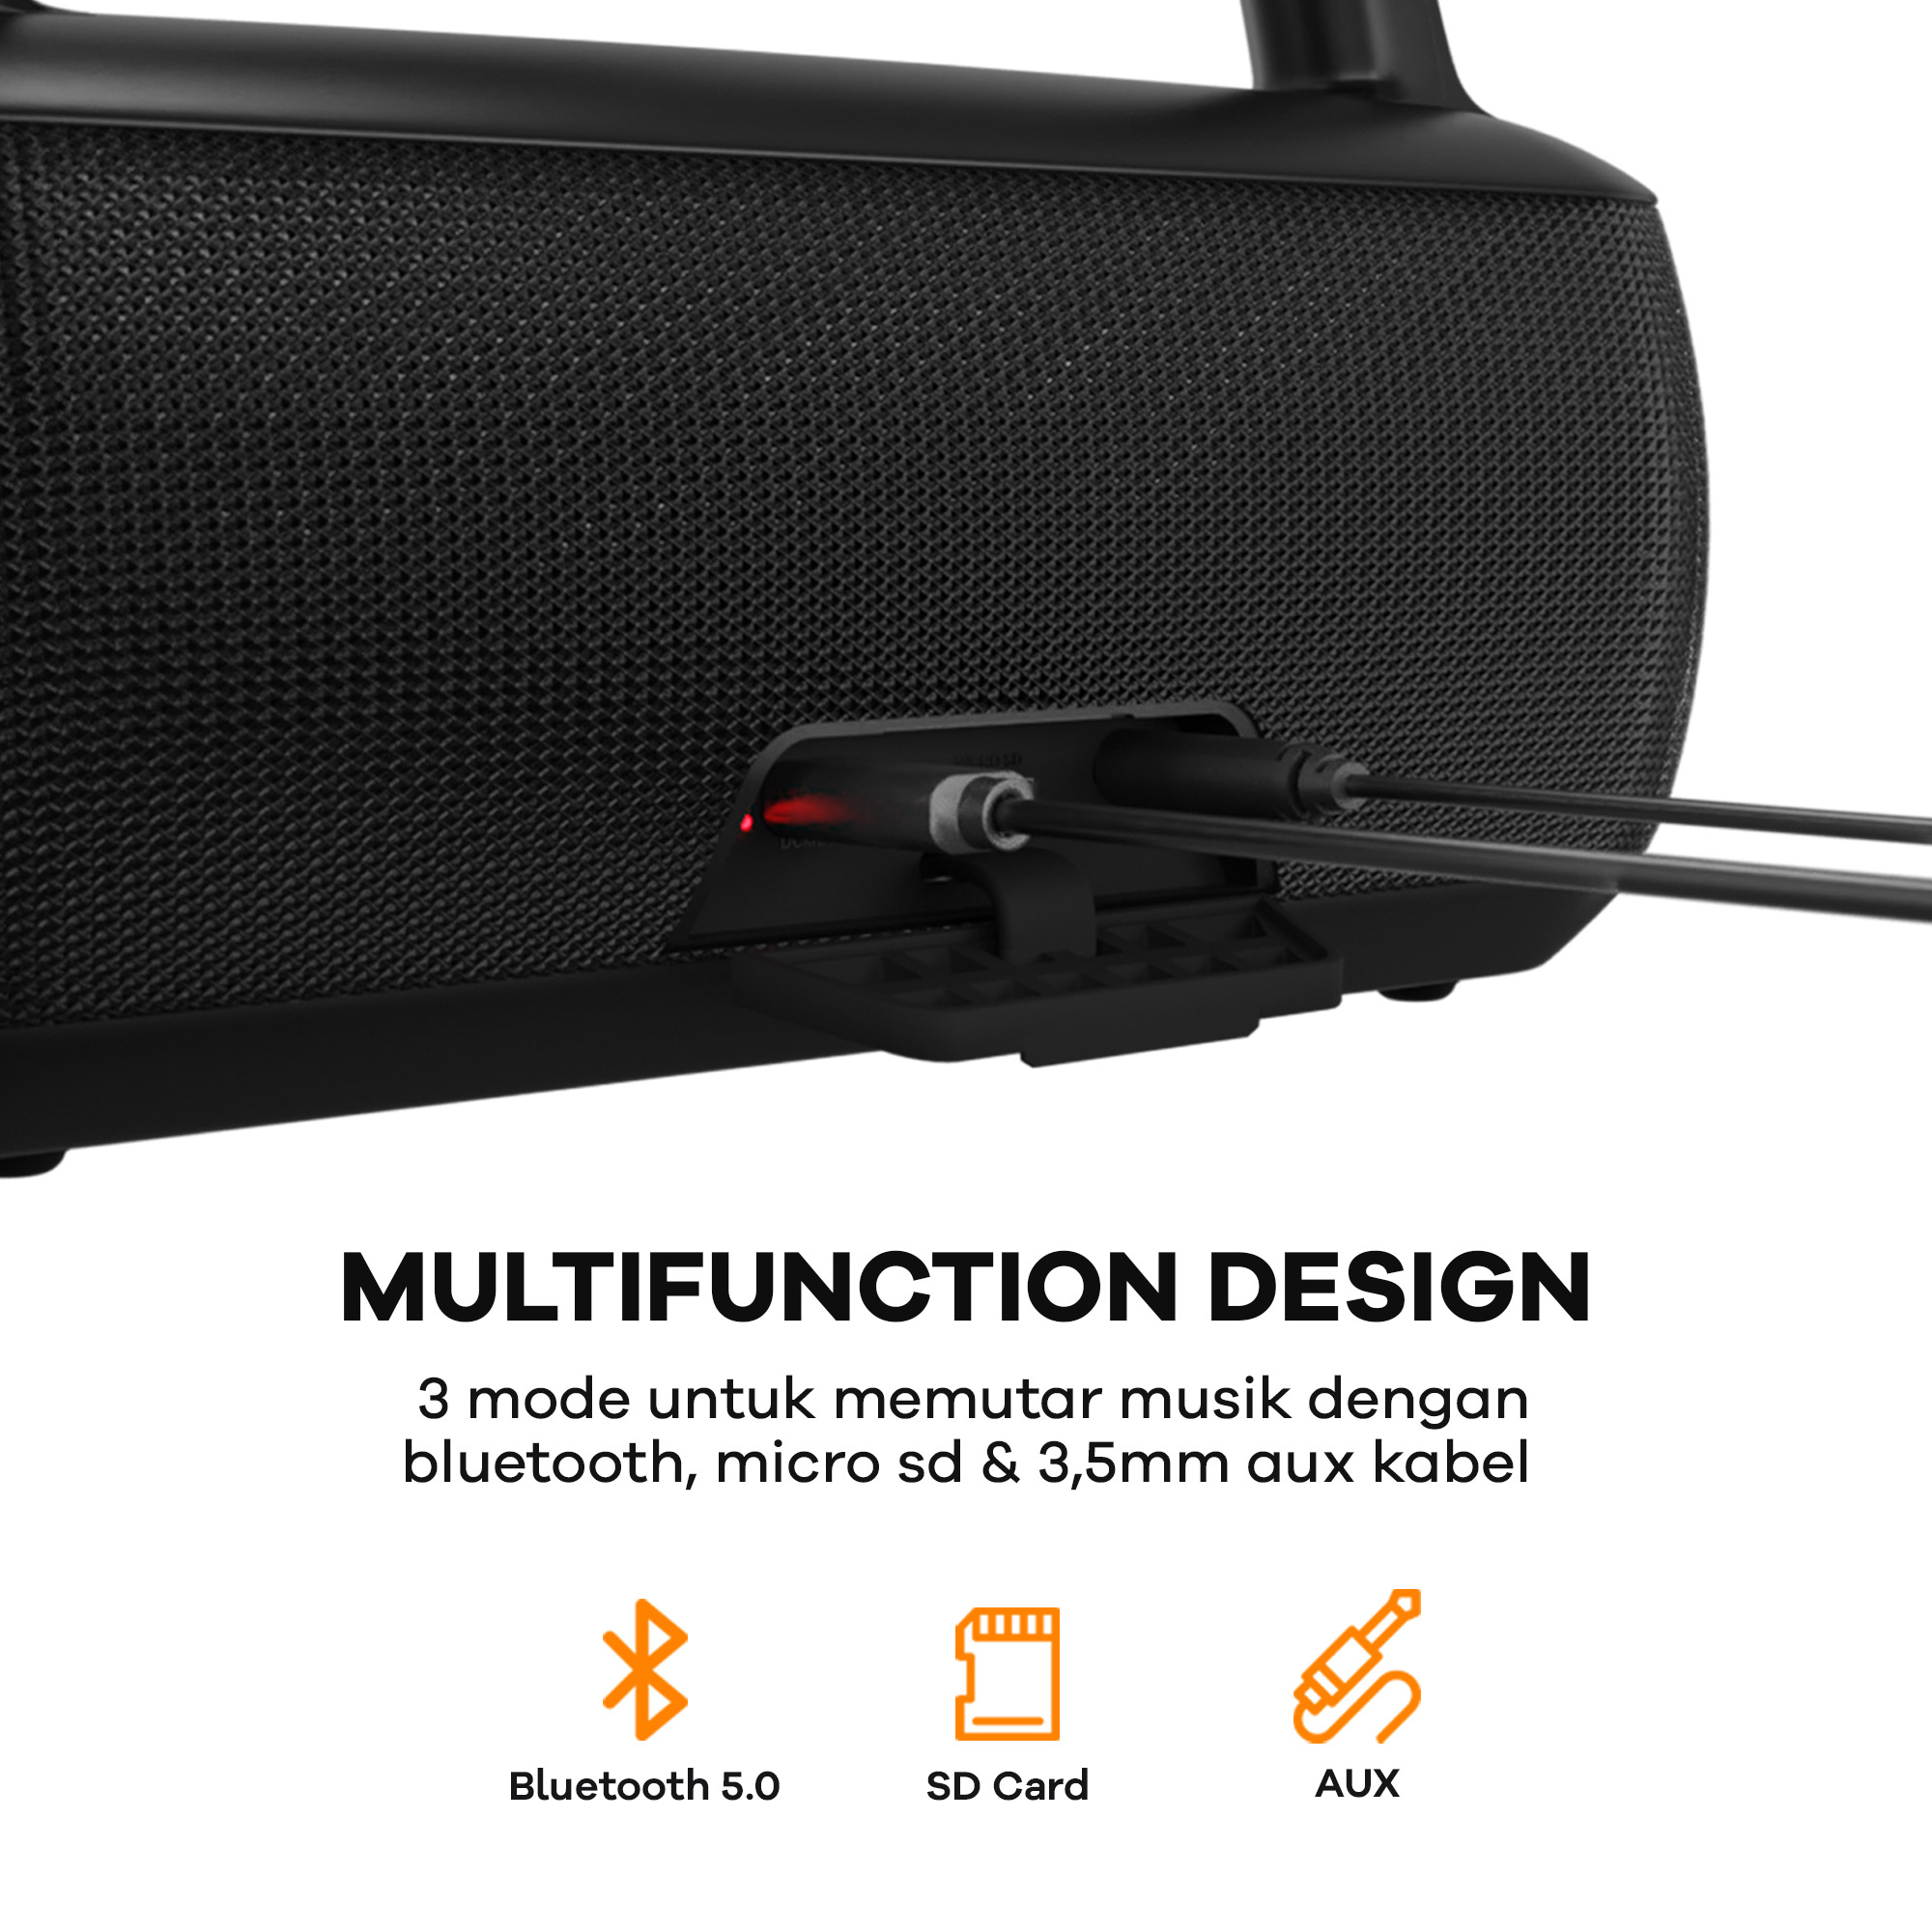 Speaker JETE S8 memiliki multifunction design